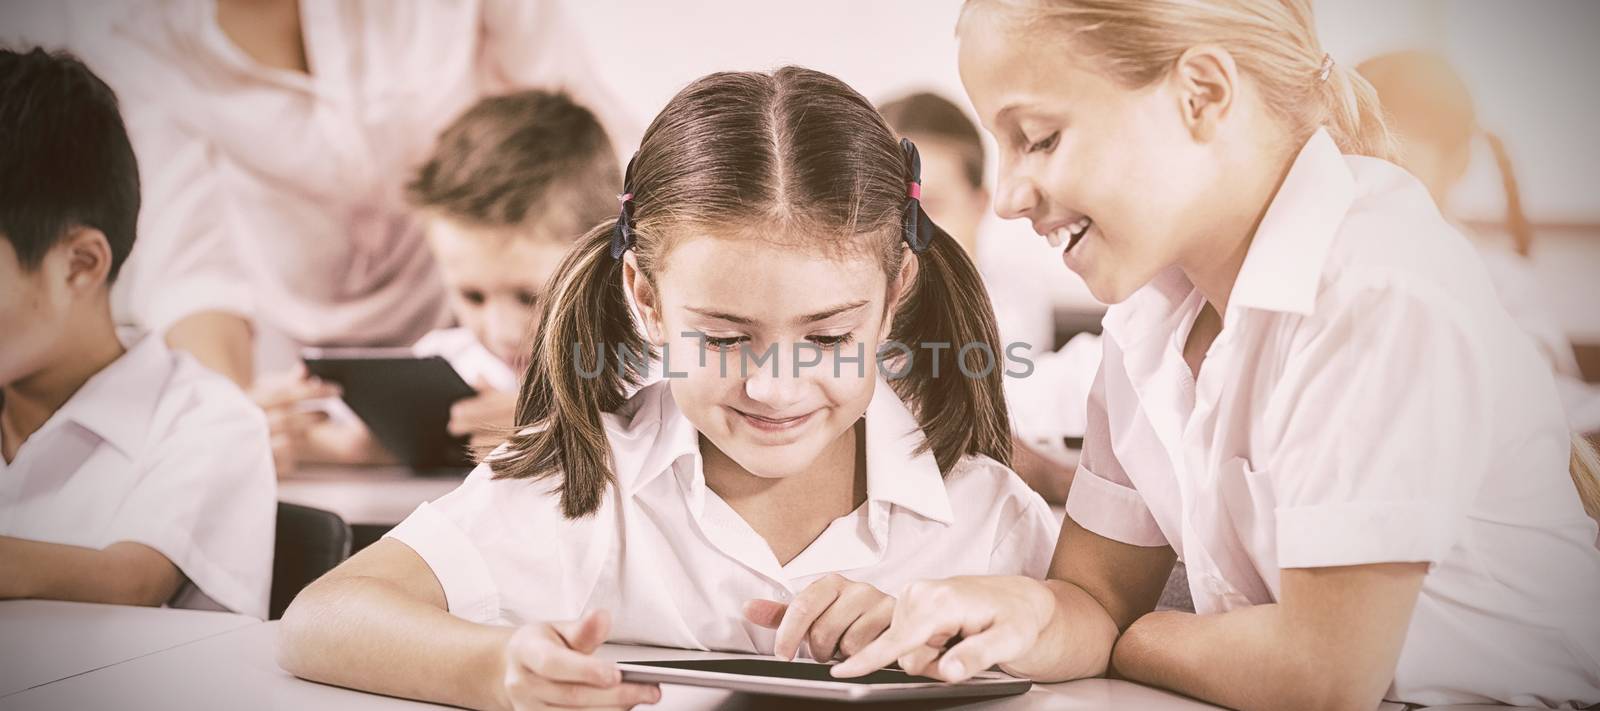 Children using digital tablets in classroom by Wavebreakmedia